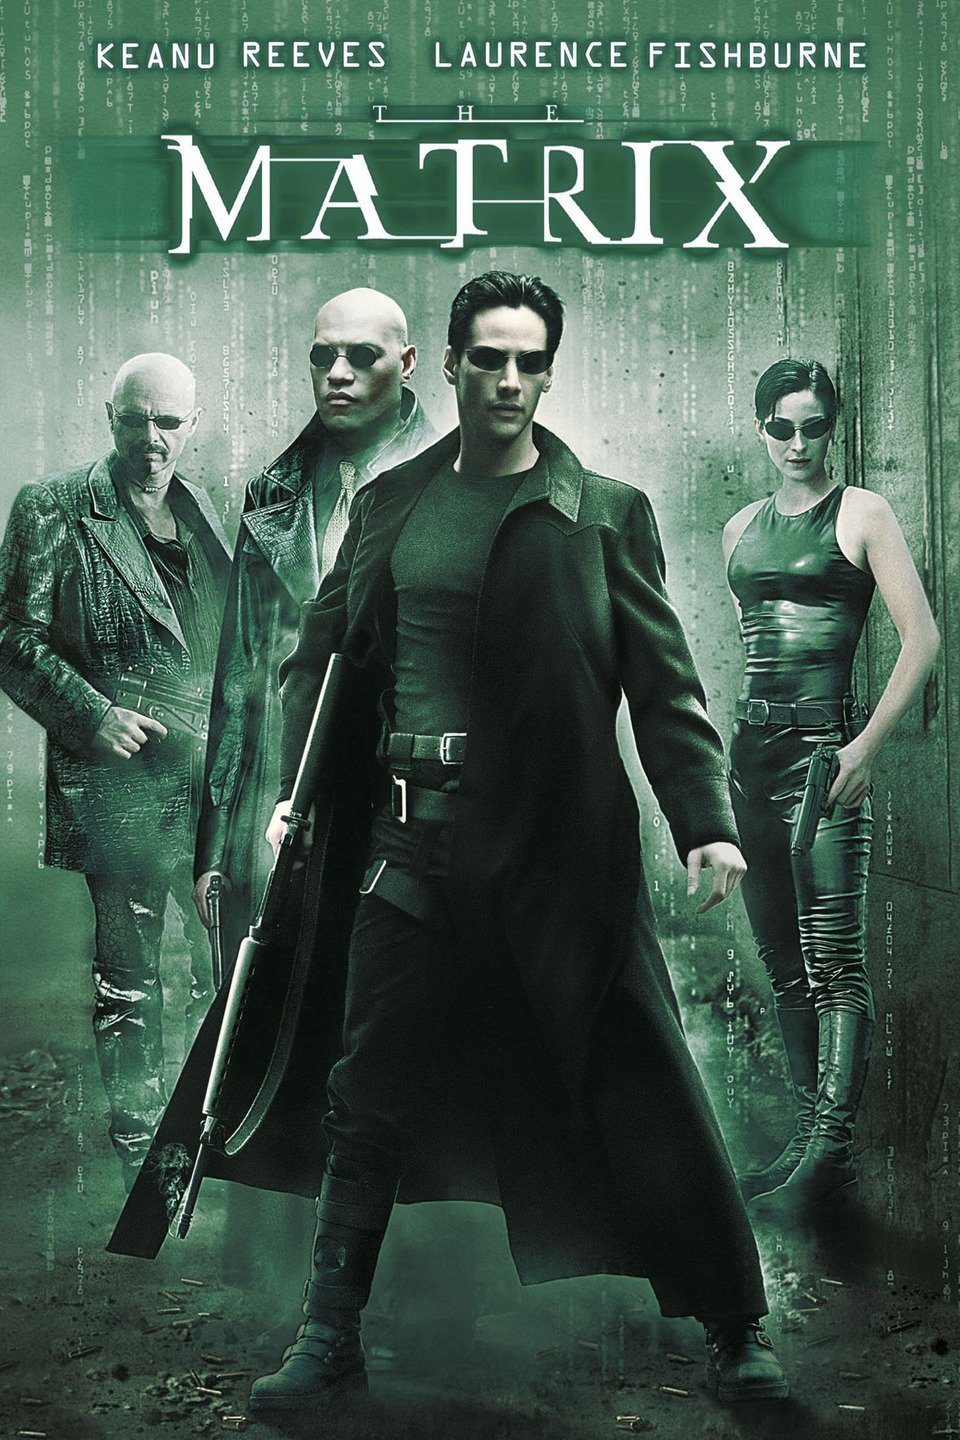 [MINI Super-HQ] The Matrix (1999) เดอะเมทริกซ์ ภาค 1 เพาะพันธุ์มนุษย์เหนือโลก [1080p] [พากย์ไทย 5.1 + อังกฤษ DTS] [บรรยายไทย + อังกฤษ] [เสียงไทย + ซับไทย] [ONE2UP]